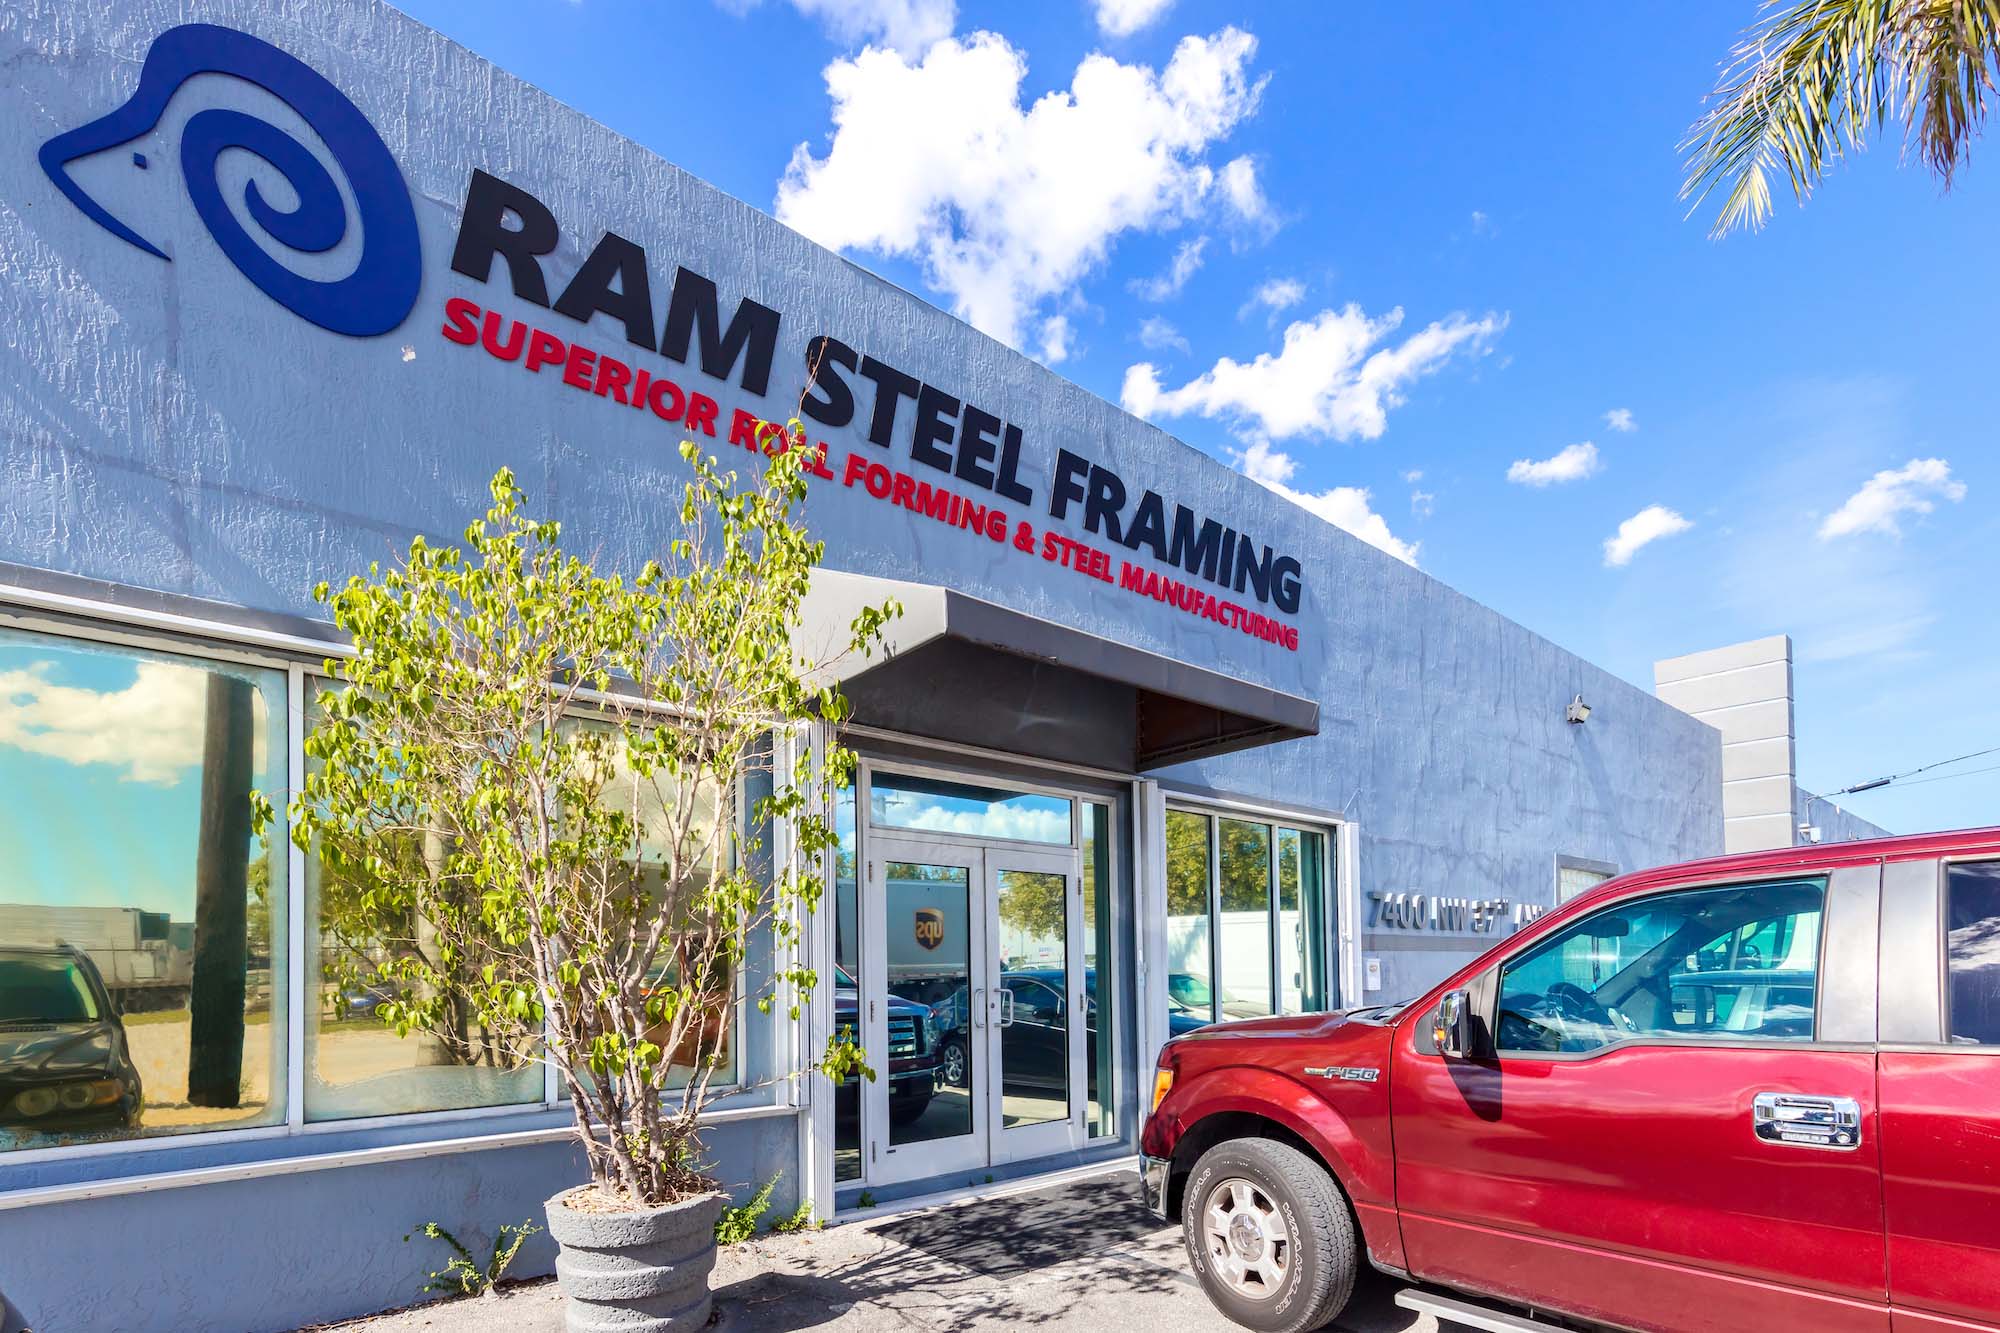 Avison Young negotiates $7.55M sale-leaseback of RAM Steel Framing HQ building spanning 105,000 SF in Miami’s Hialeah industrial corridor